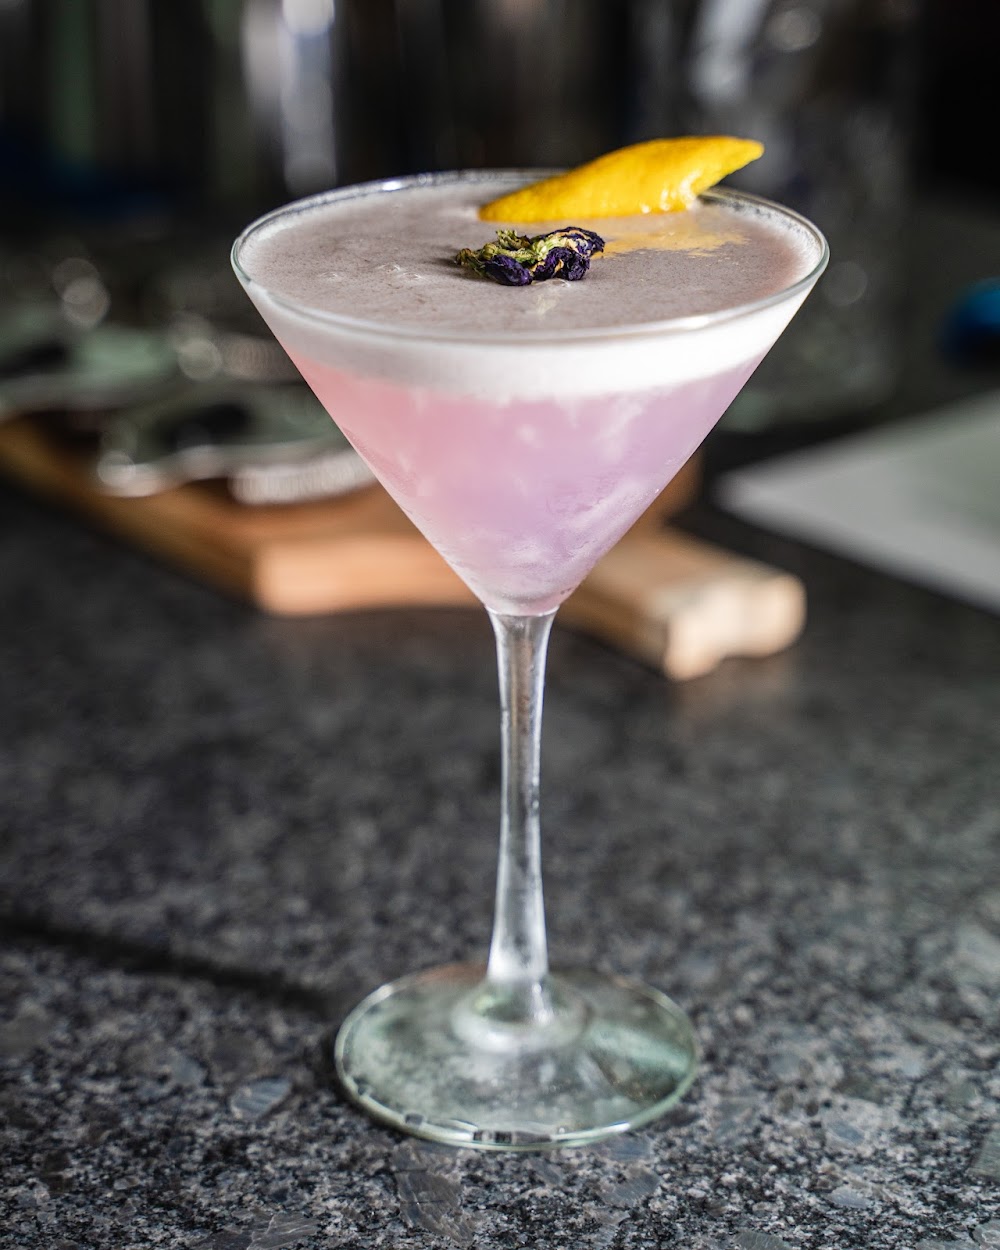 Amani’s North Craft Cocktail Bar